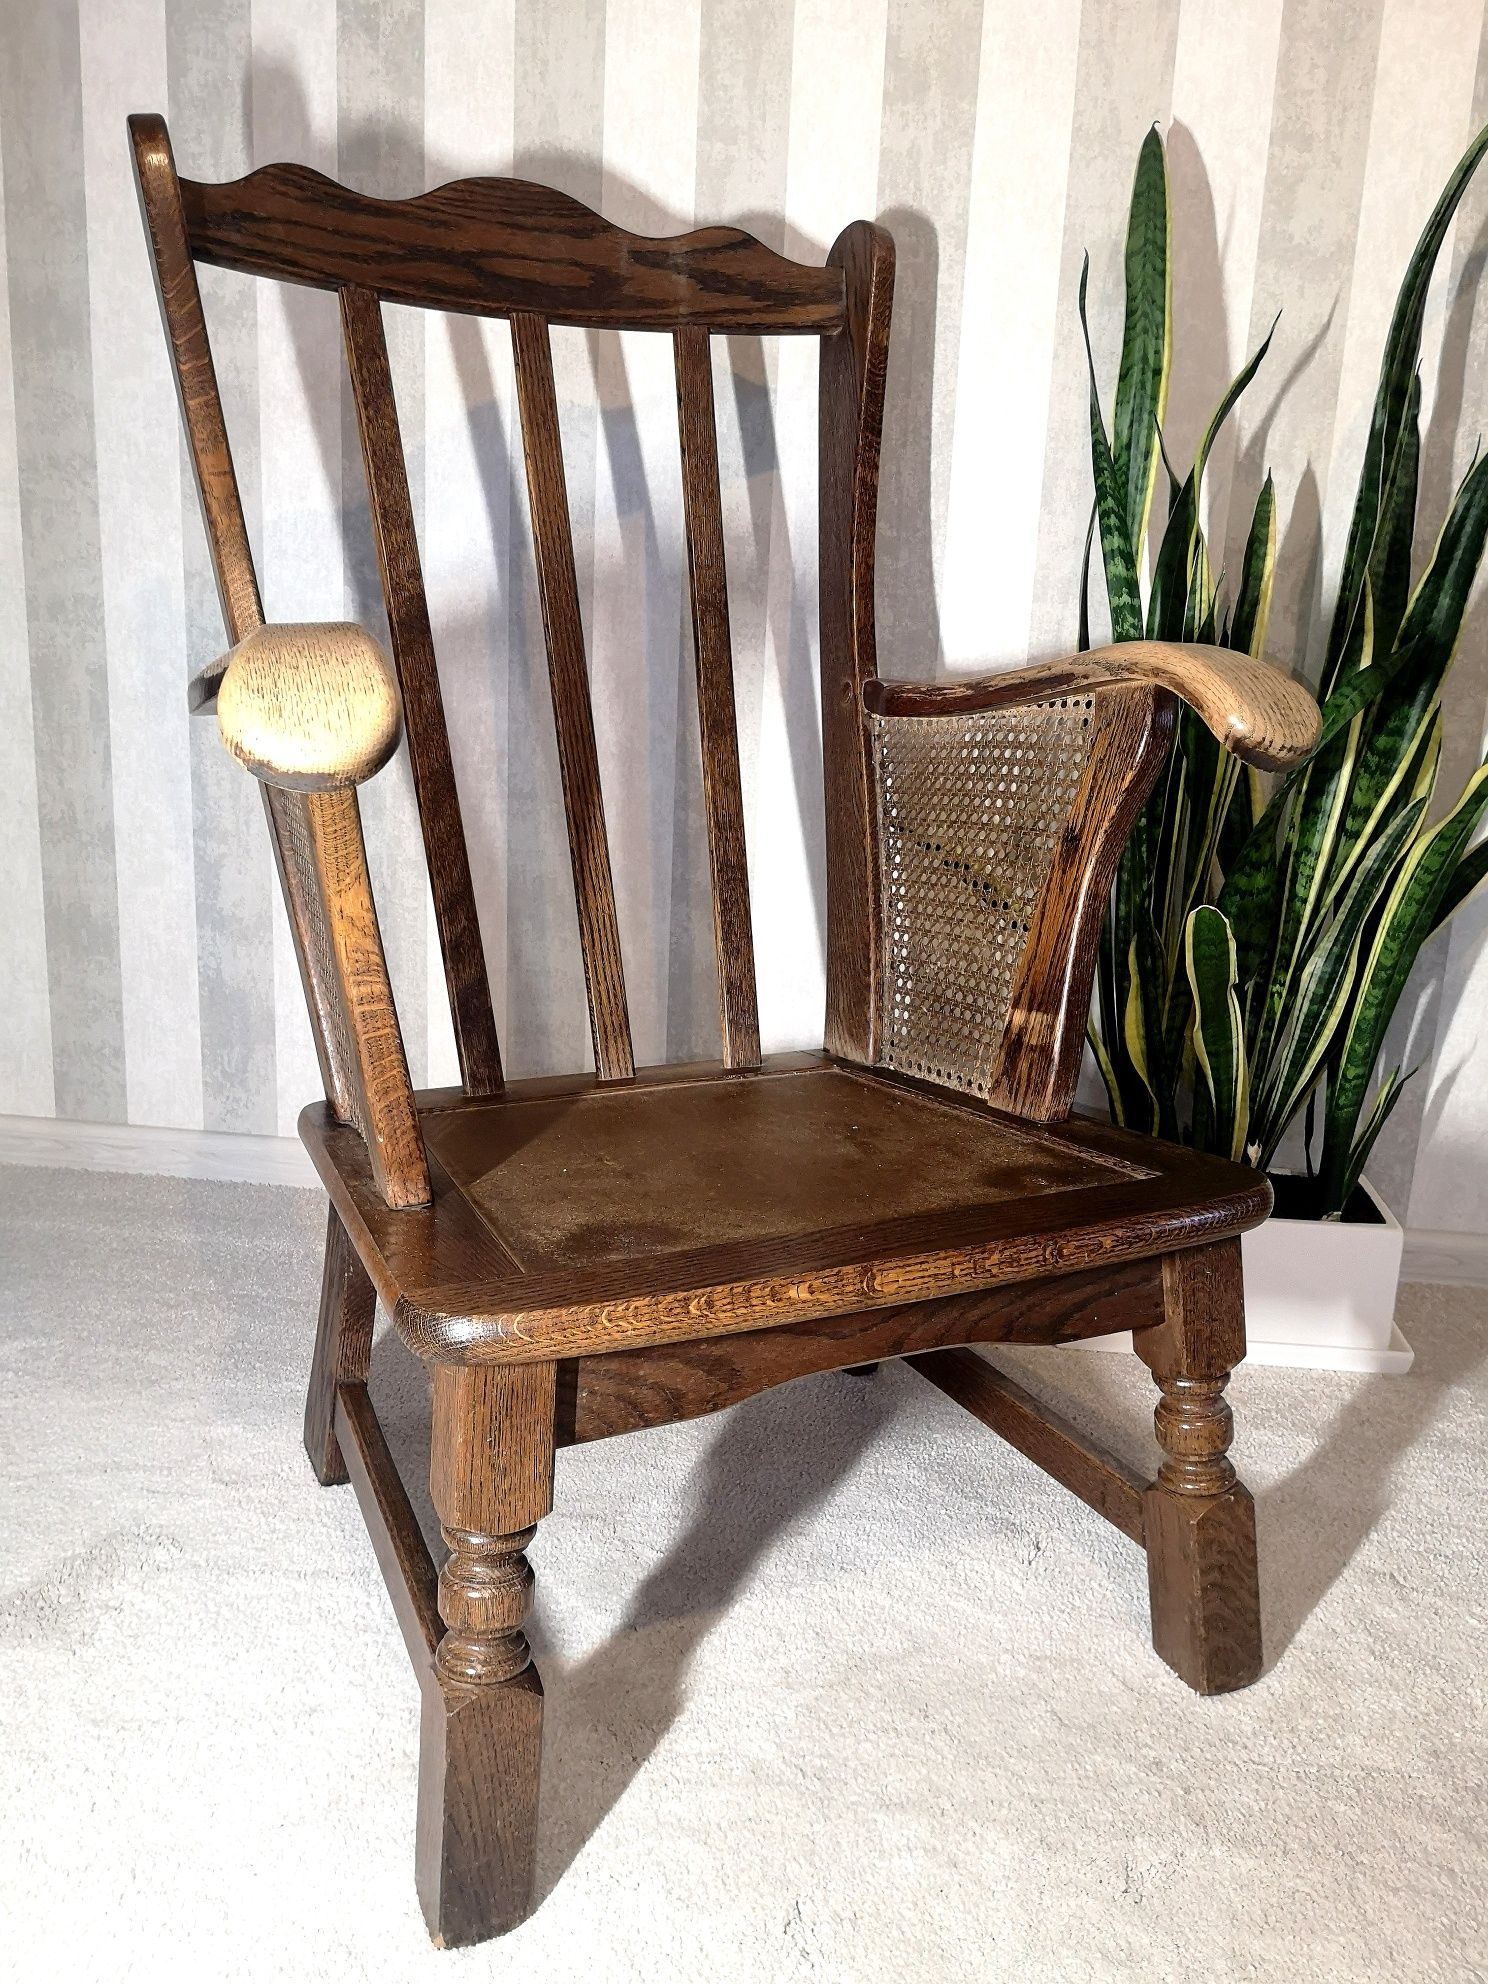 Drewniany, solidny fotel